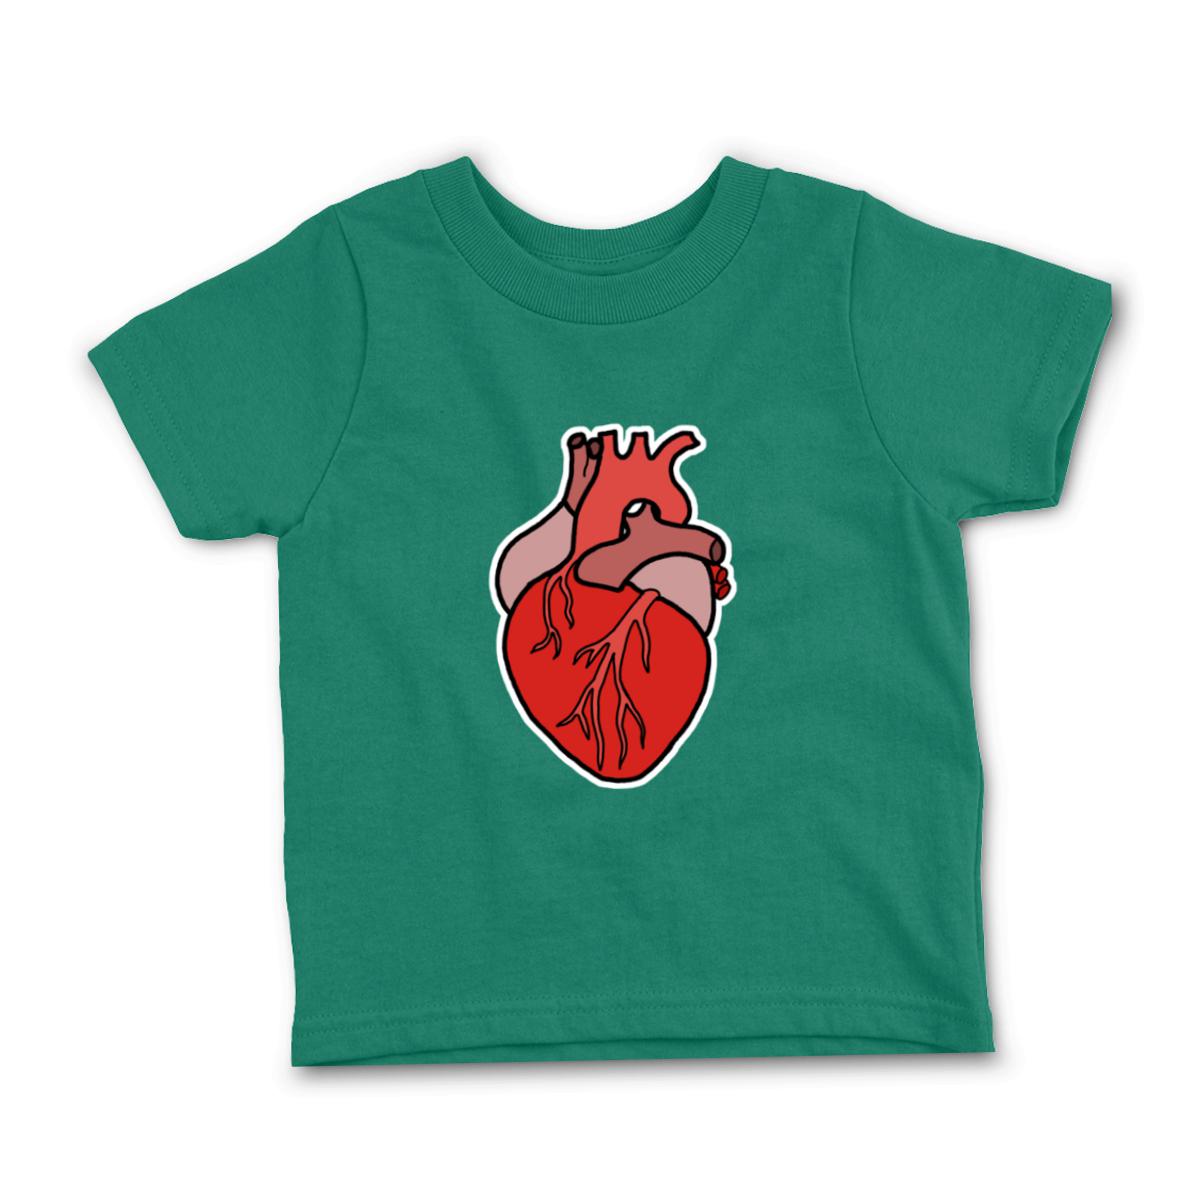 Illustrative Heart Infant Tee 18M kelly